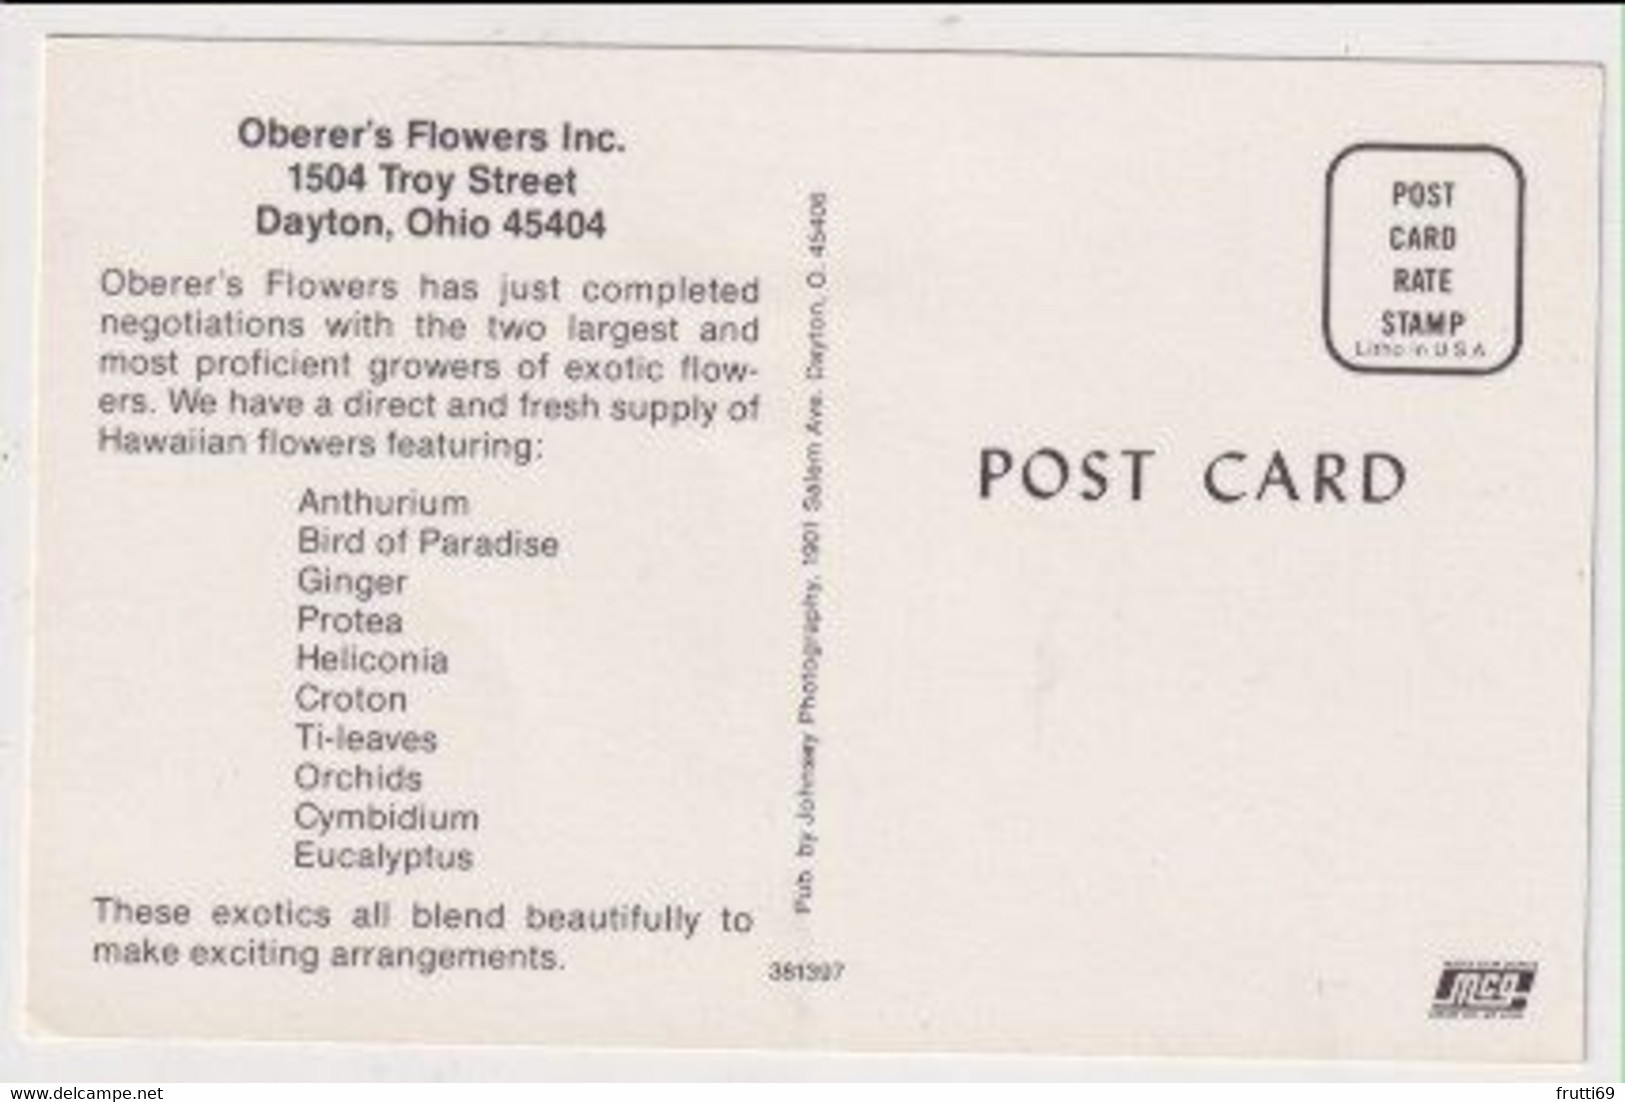 AK 018692 USA - Ohio - Dayton - Oberer's Flowers Inc. - Dayton